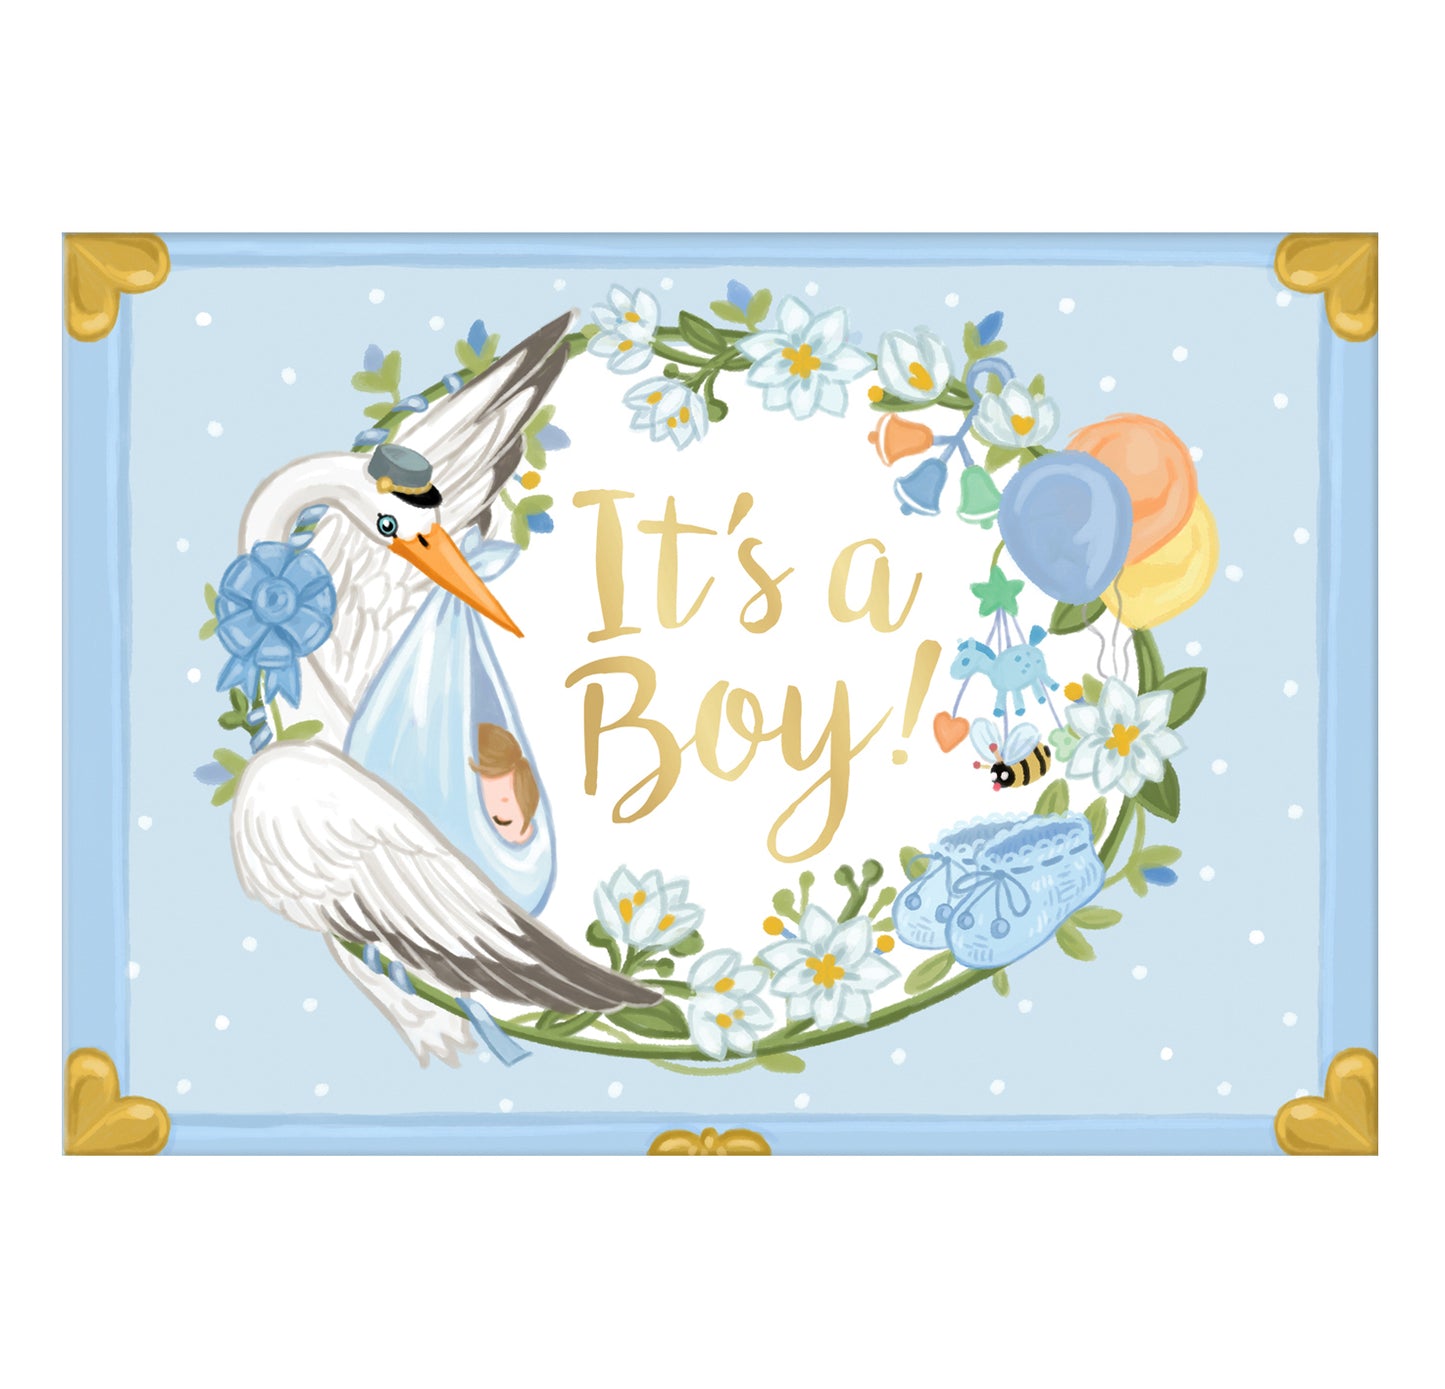 It's A Boy Music Box Card Novelty Dancing Musical Greeting Card